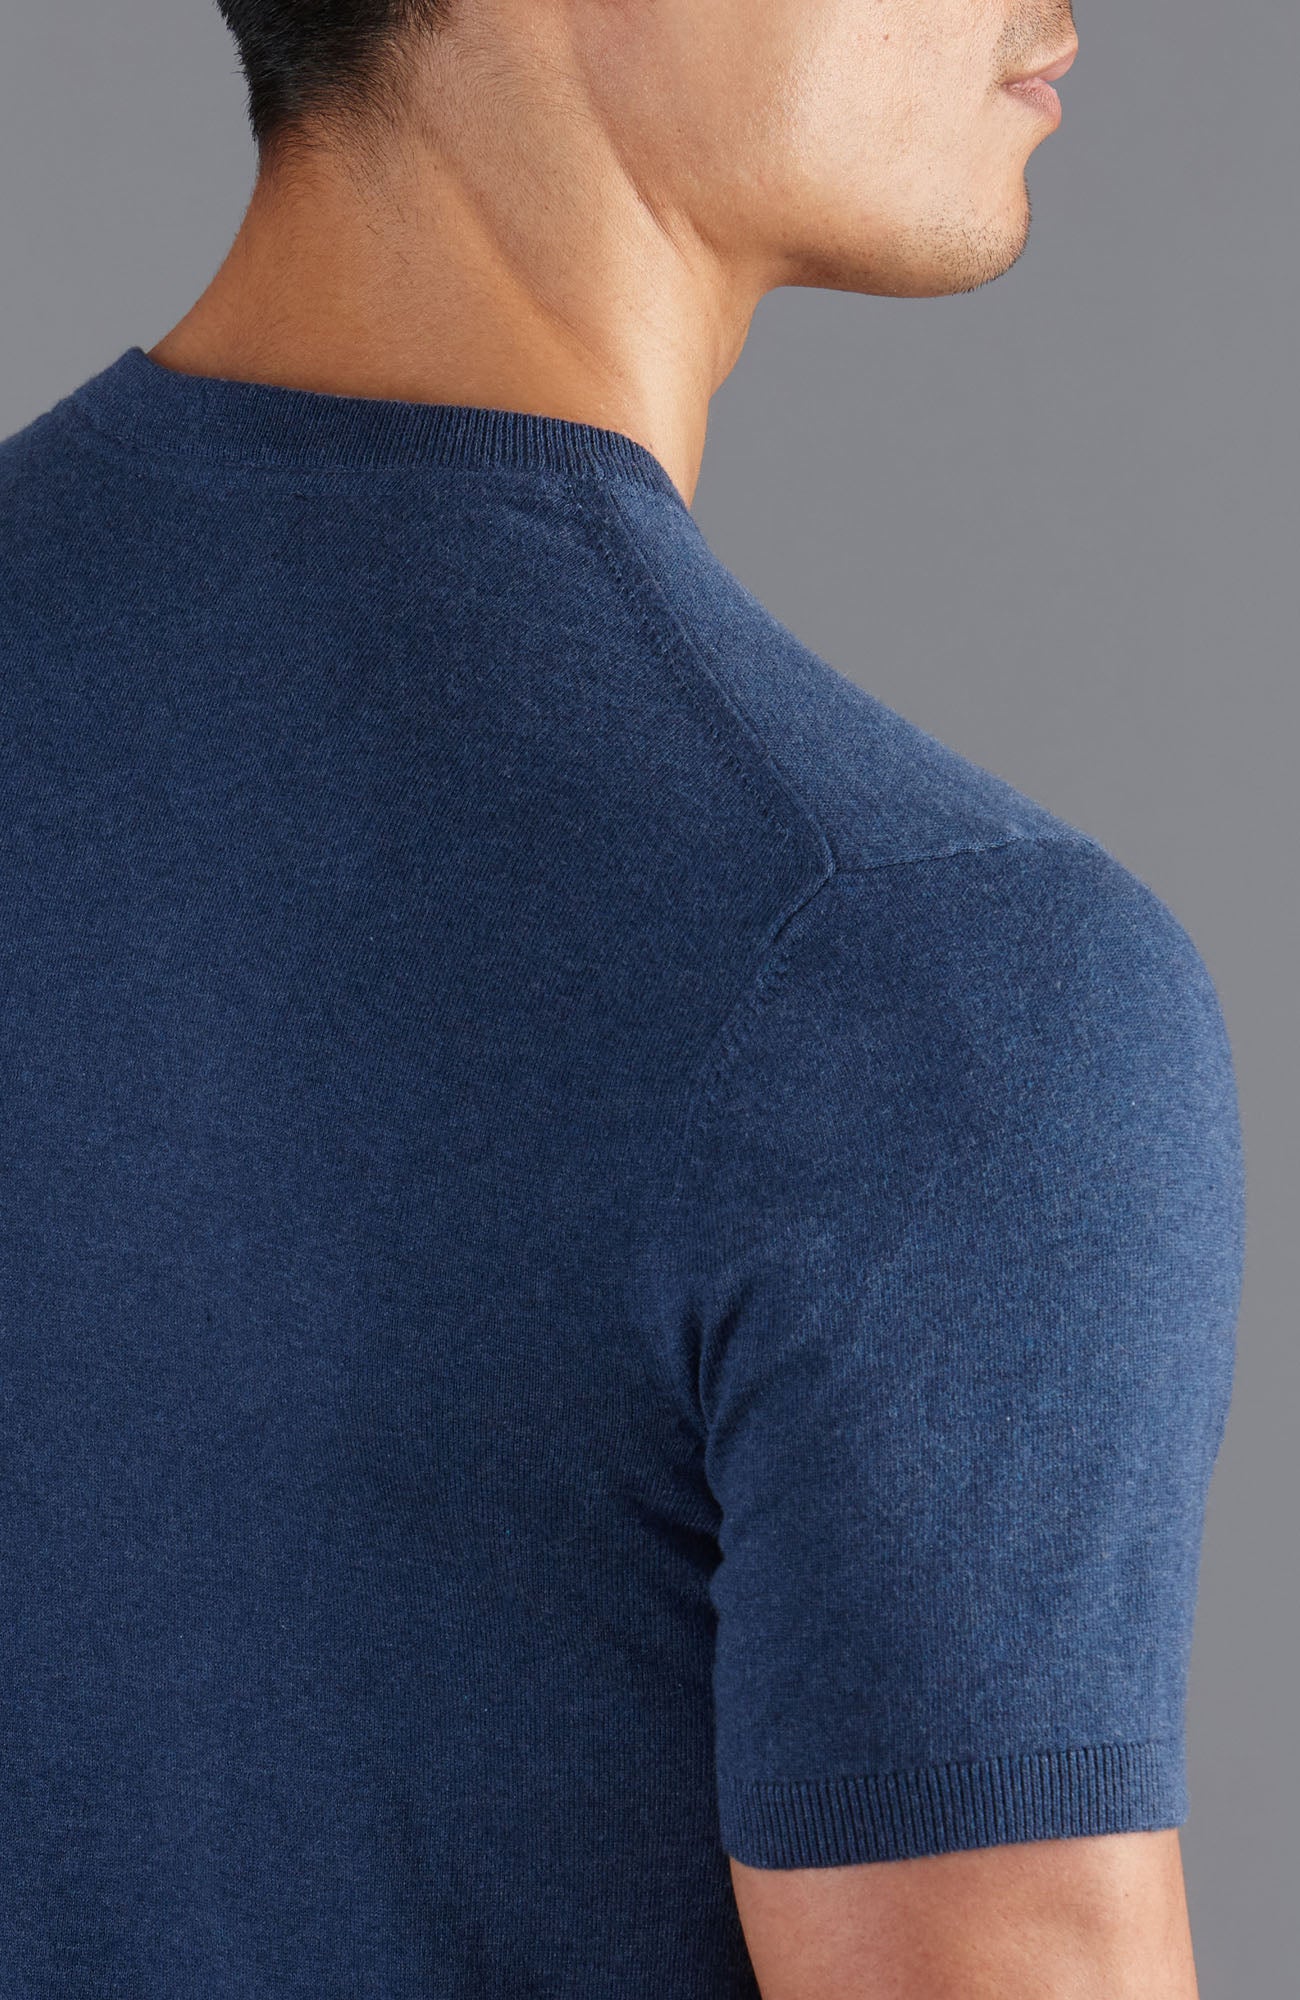 blue mens knitted t shirt